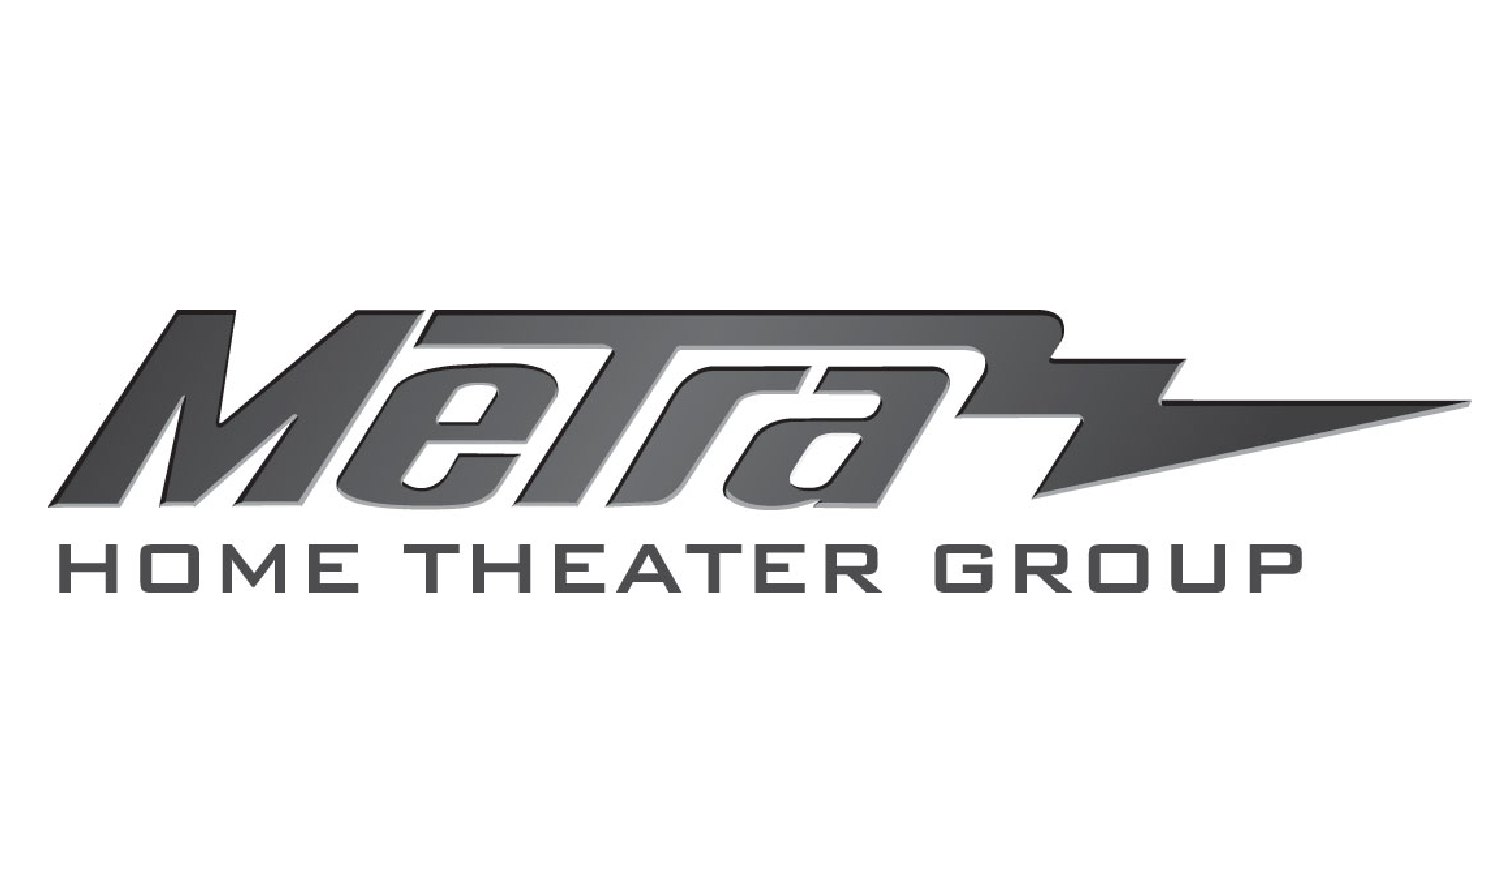 Metra sponsor logo